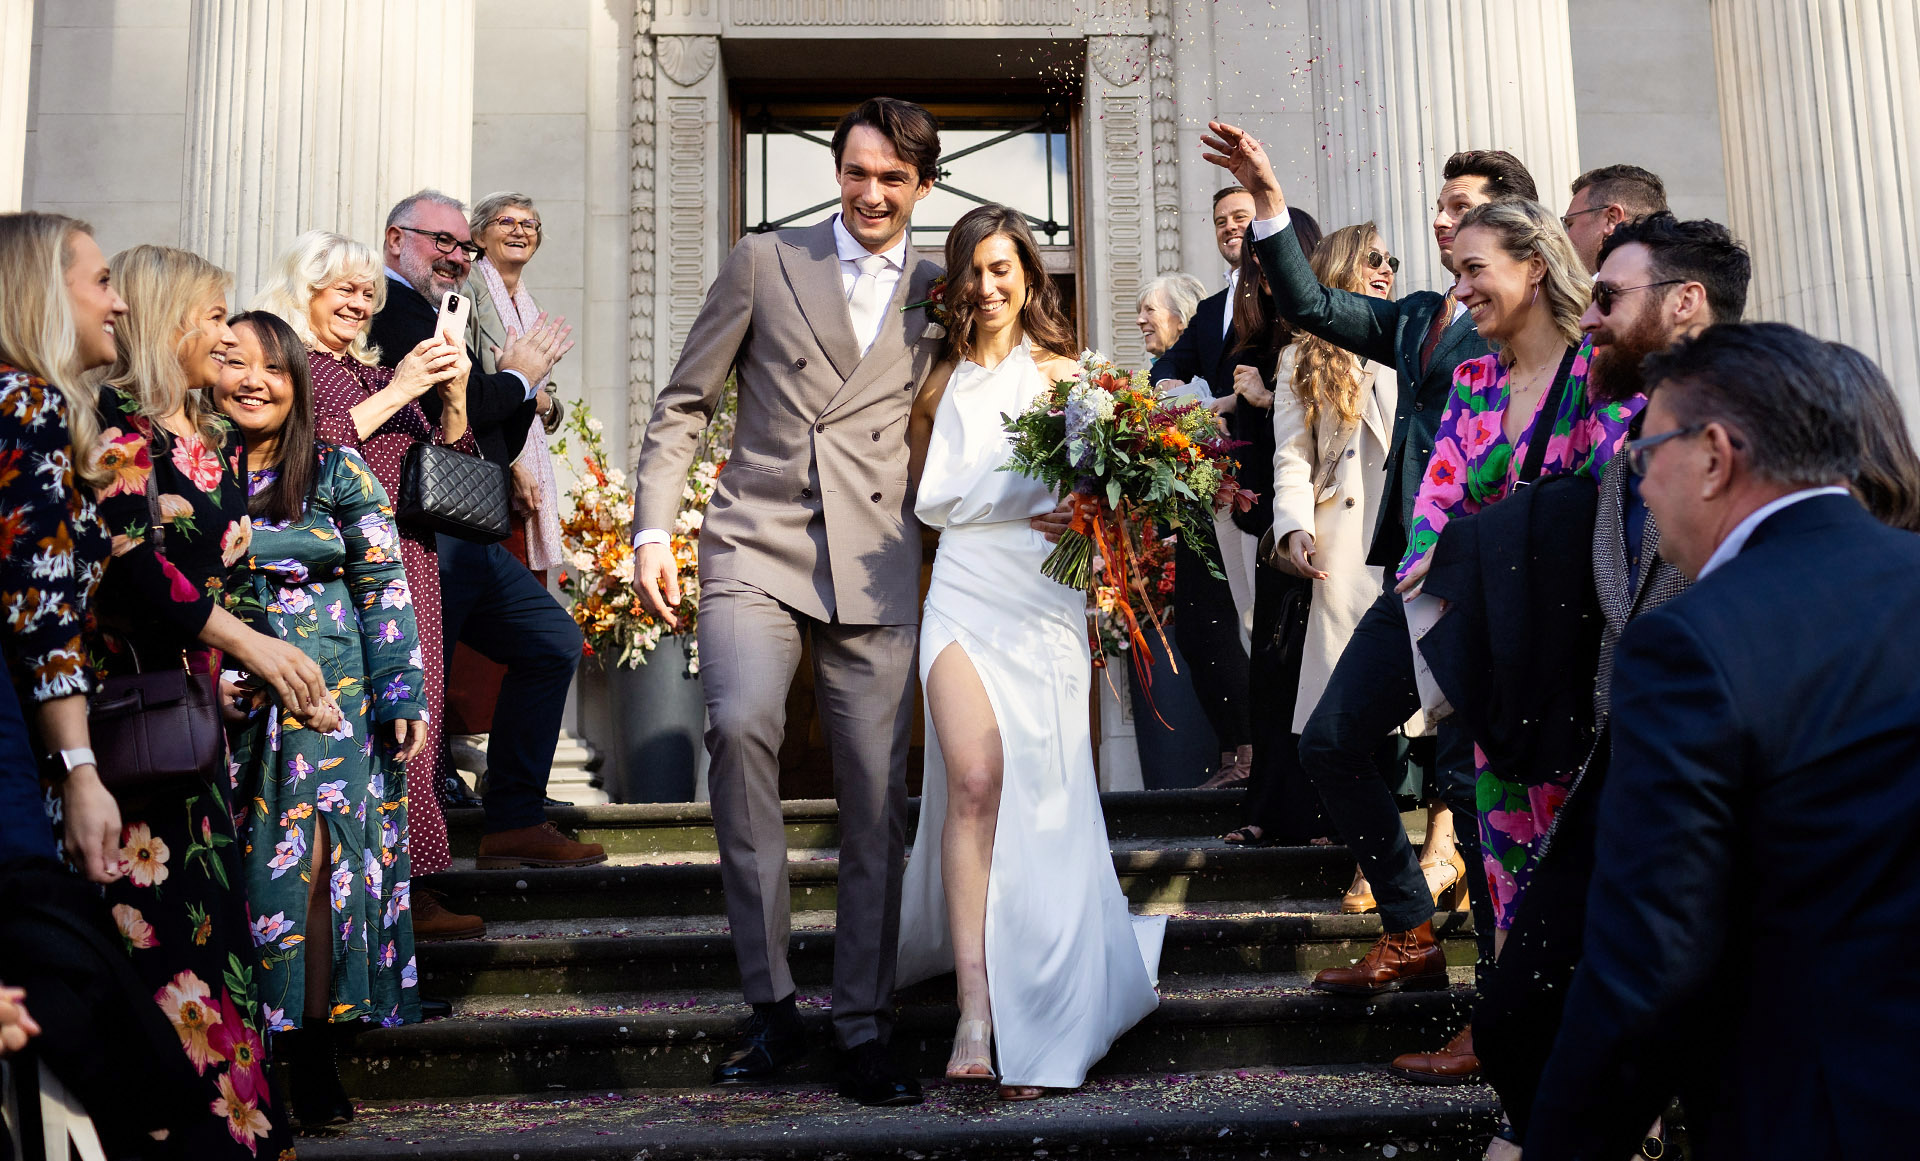 Marylebone Town Hall Wedding - Couple exiting to confetti